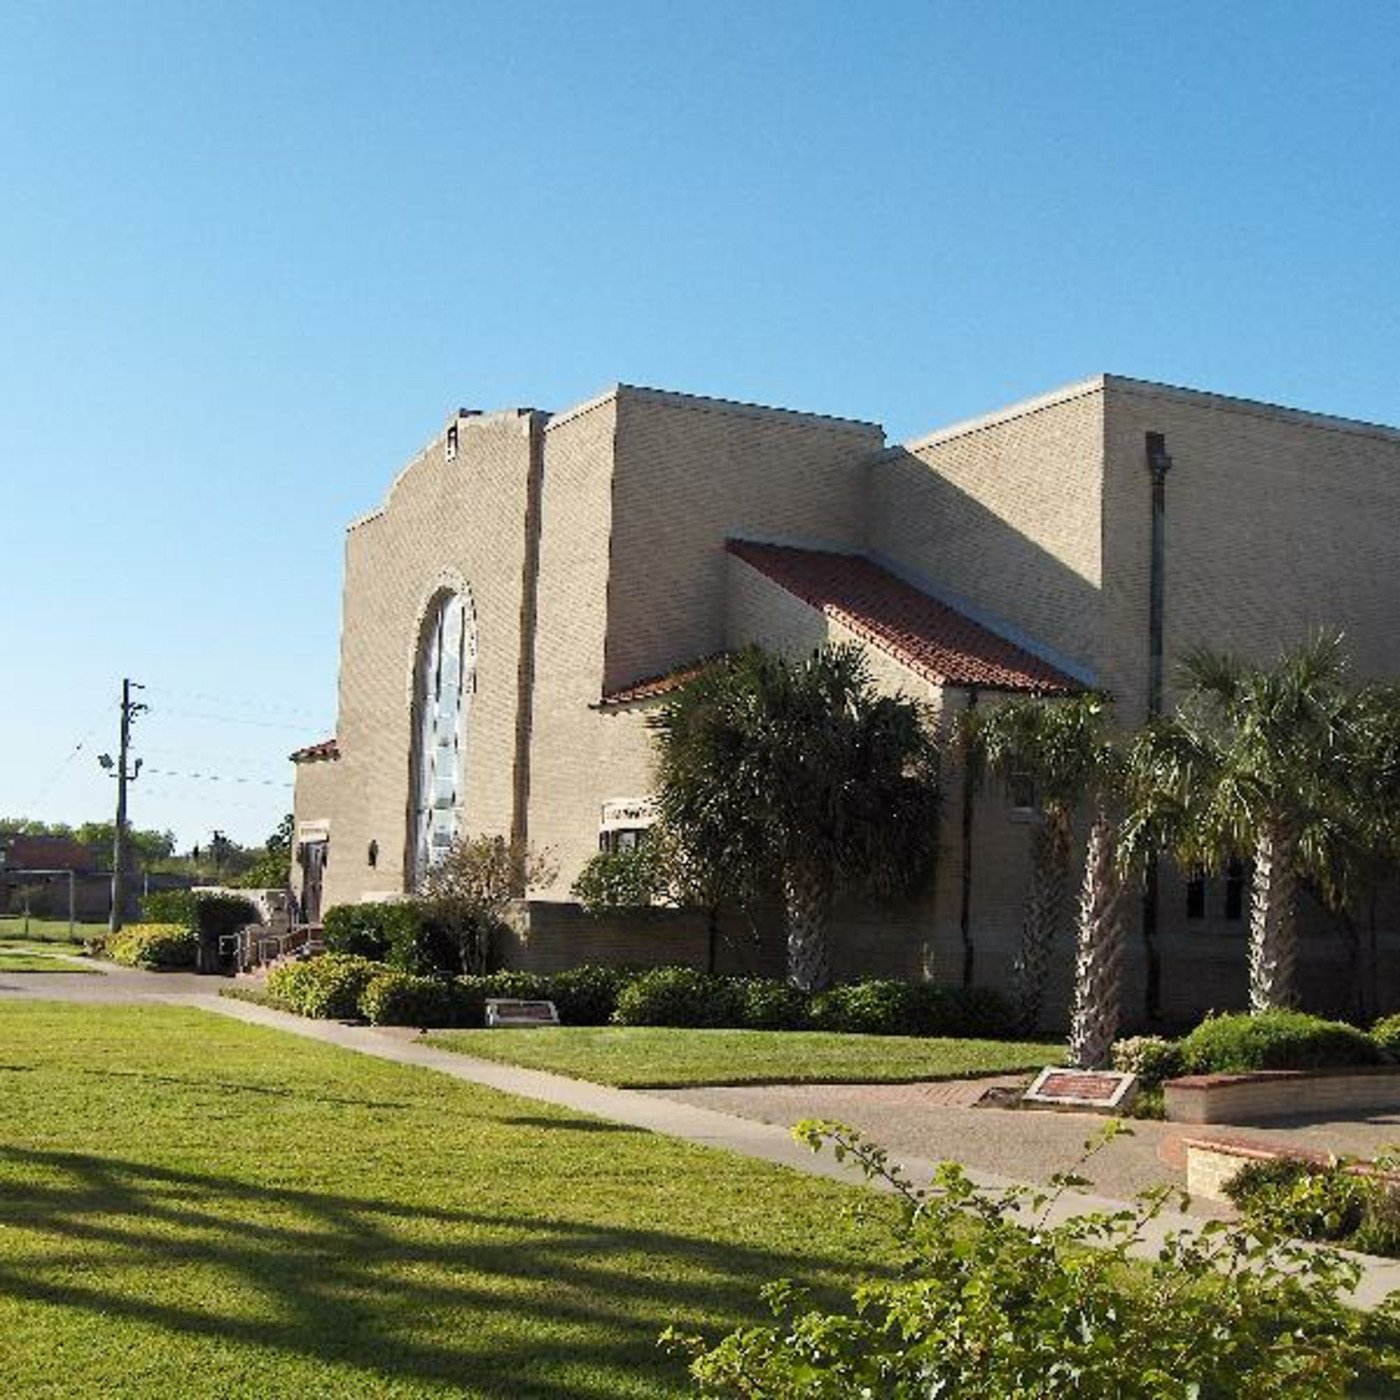 First Baptist Church, Corpus Christi, TX